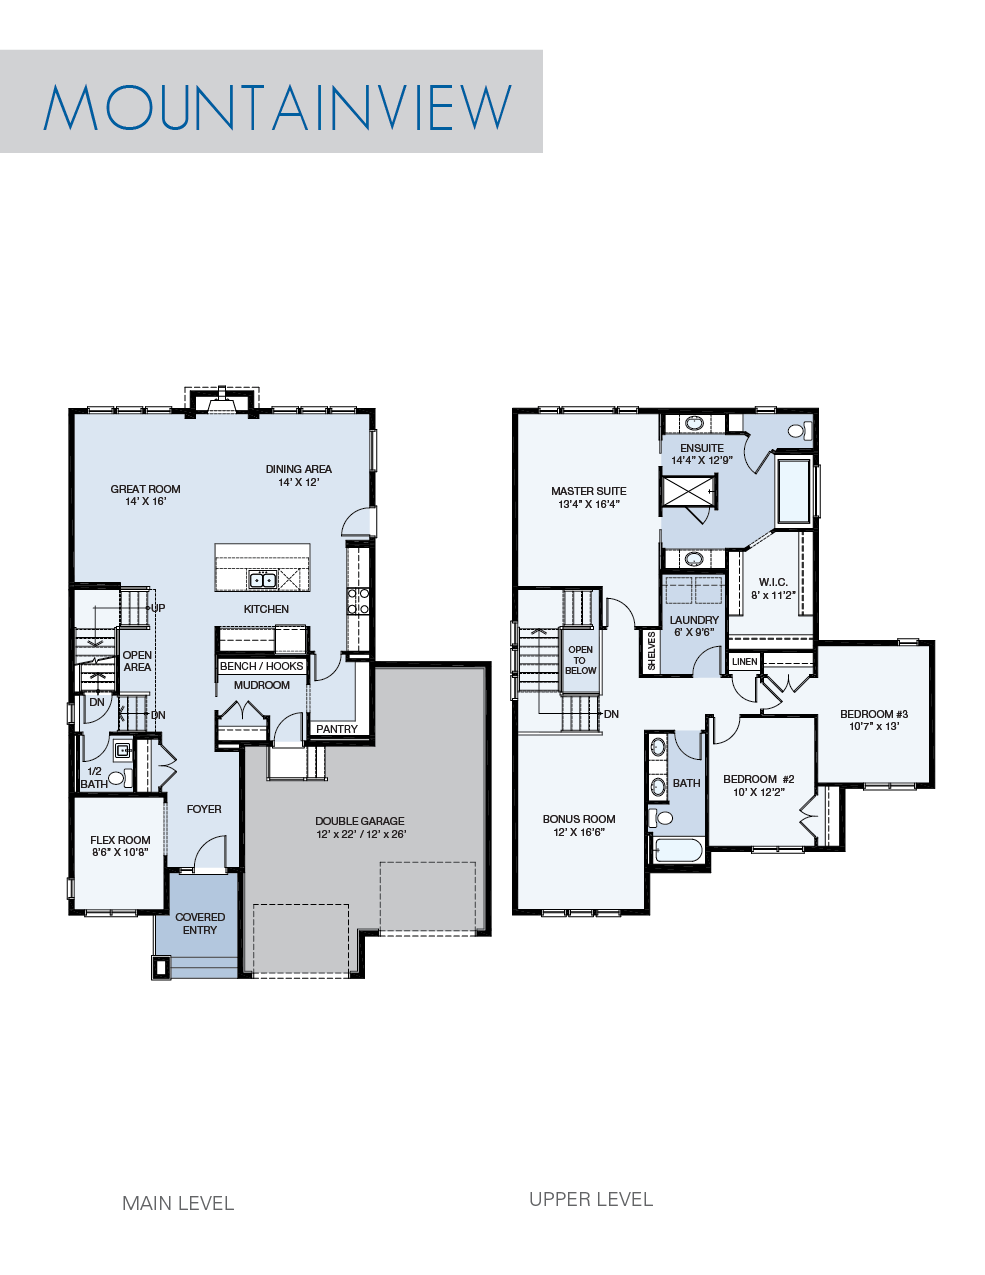 Mountainview home model Floor plan